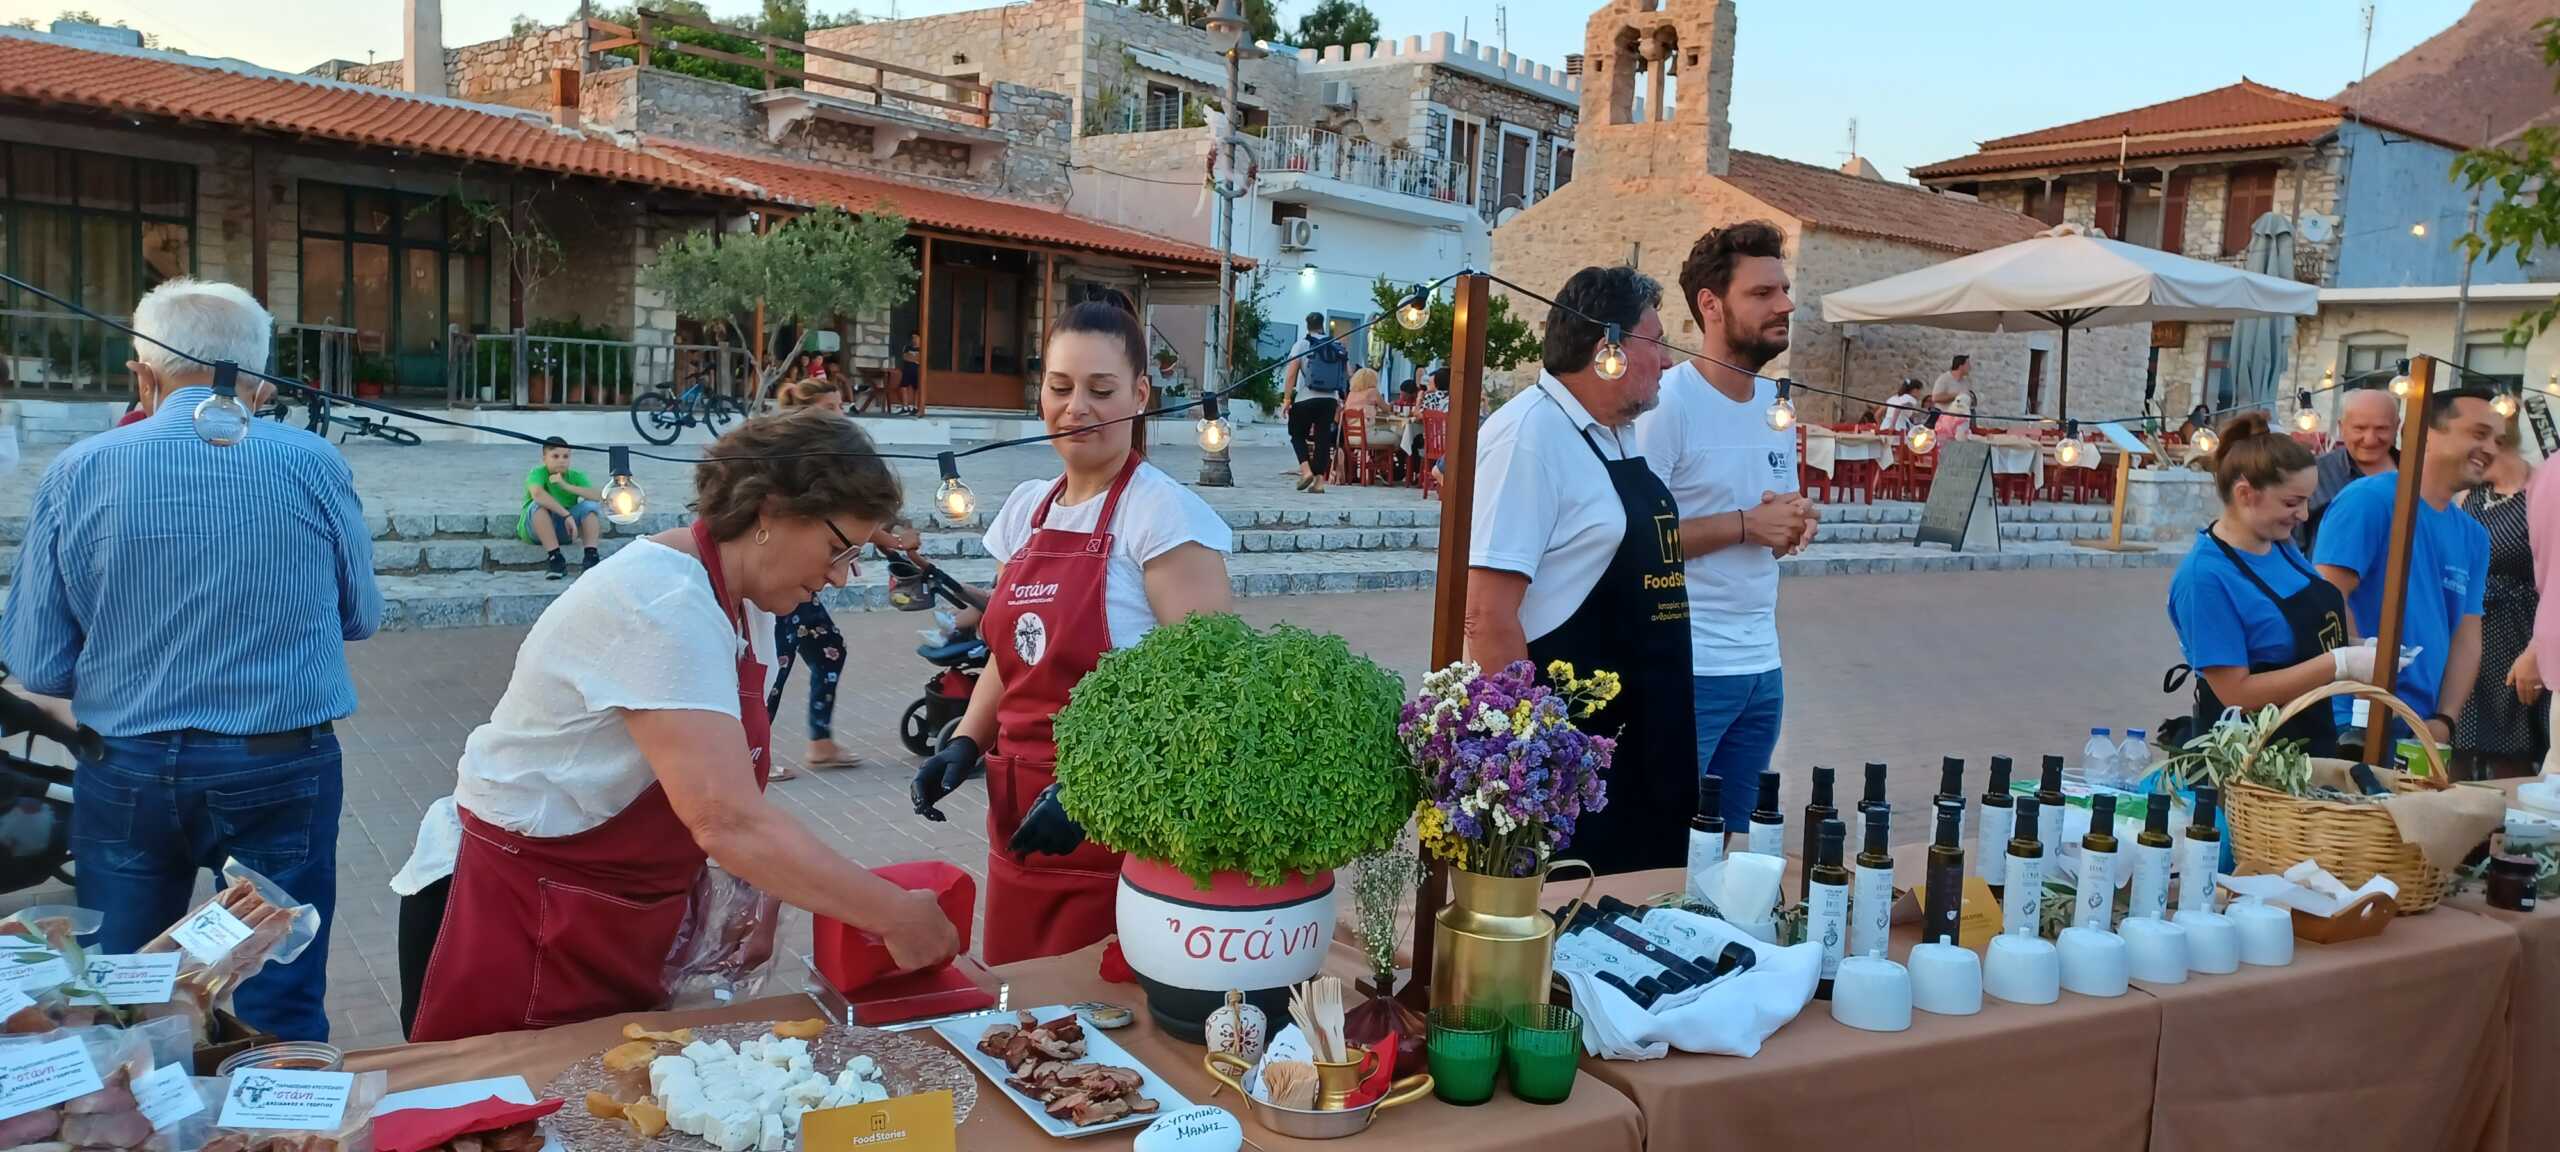 Peloponnese Food Stories: Γαστρονομικός πλούτος στο 1ο Φεστιβάλ Γαστρονομίας Πελοποννήσου ξεκίνησε από την Αερόπολη